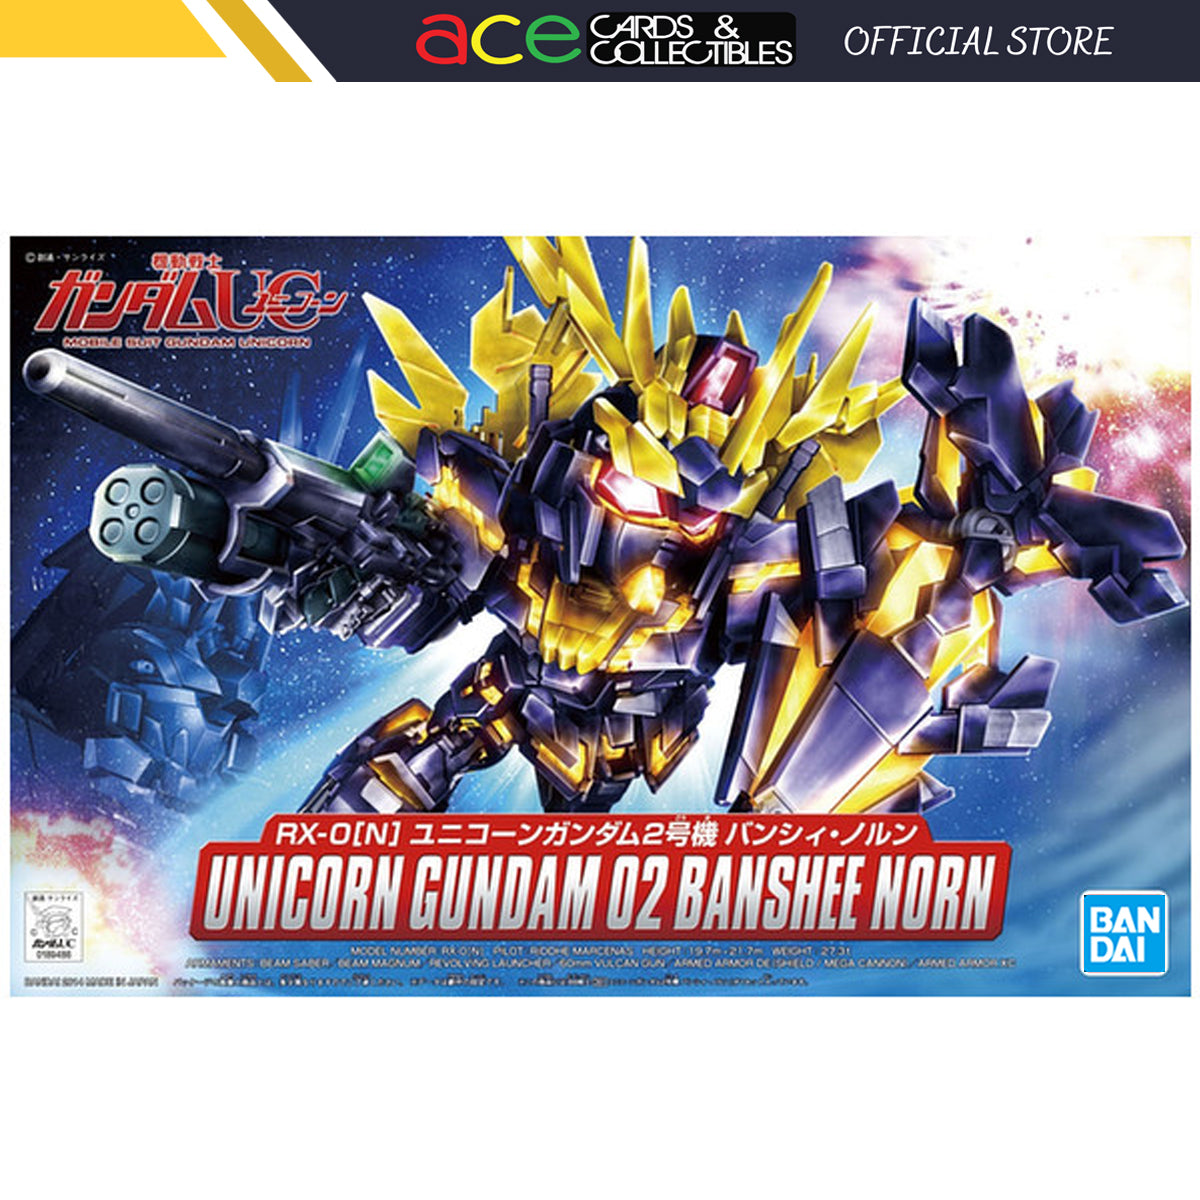 BB Unicorn Gundam 02 Banshee Norn-Bandai-Ace Cards & Collectibles